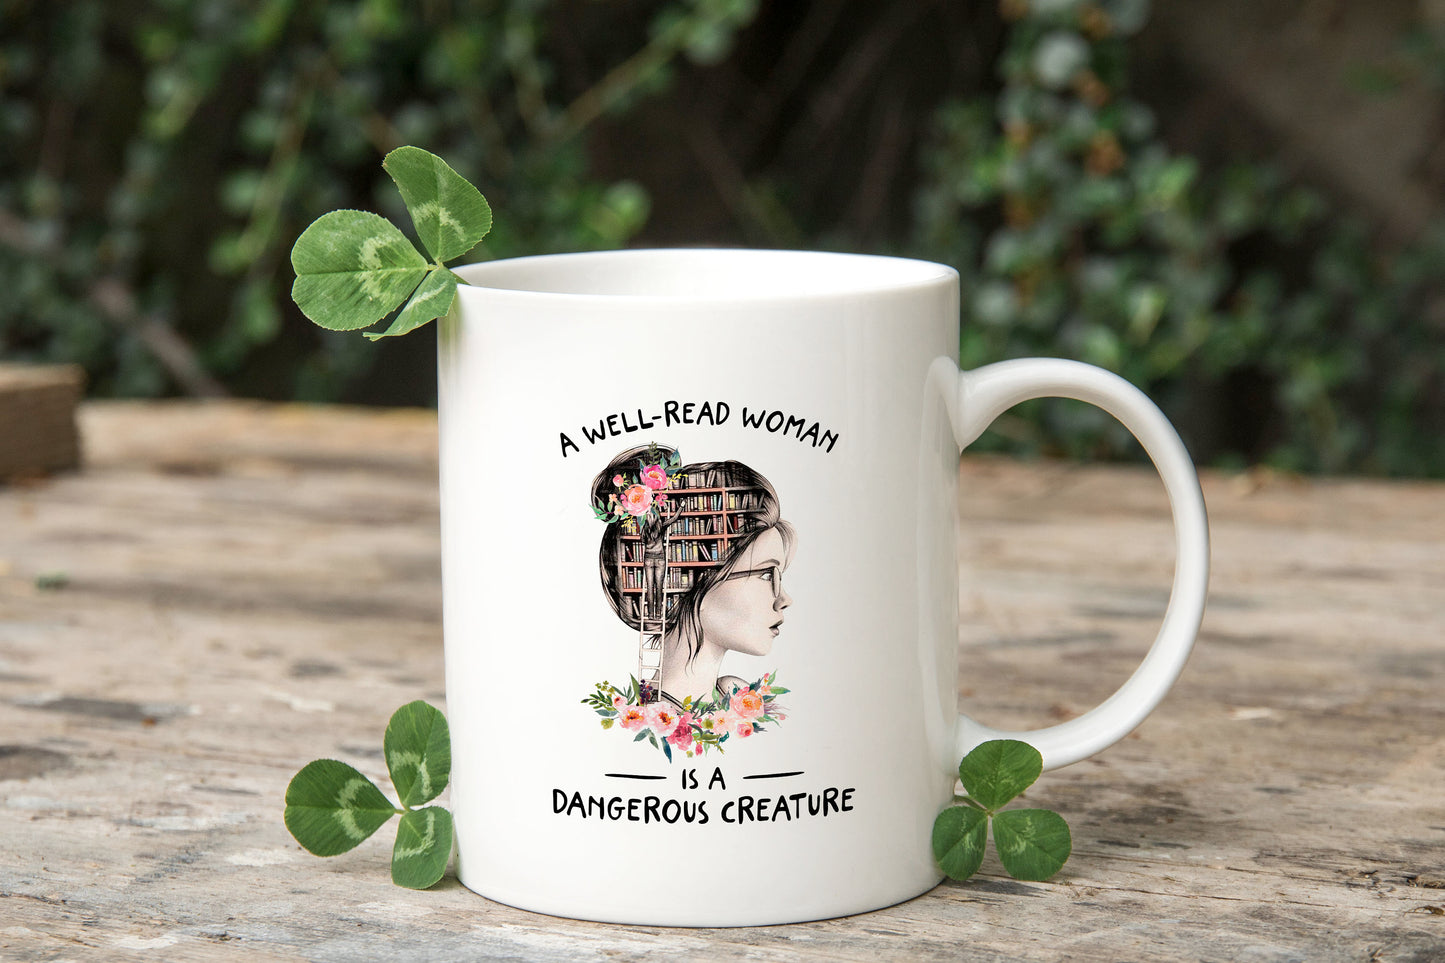 Custom Coffee Mug for Mom, Long Distance Mom Gift from Daughter, Mom Gift Ideas